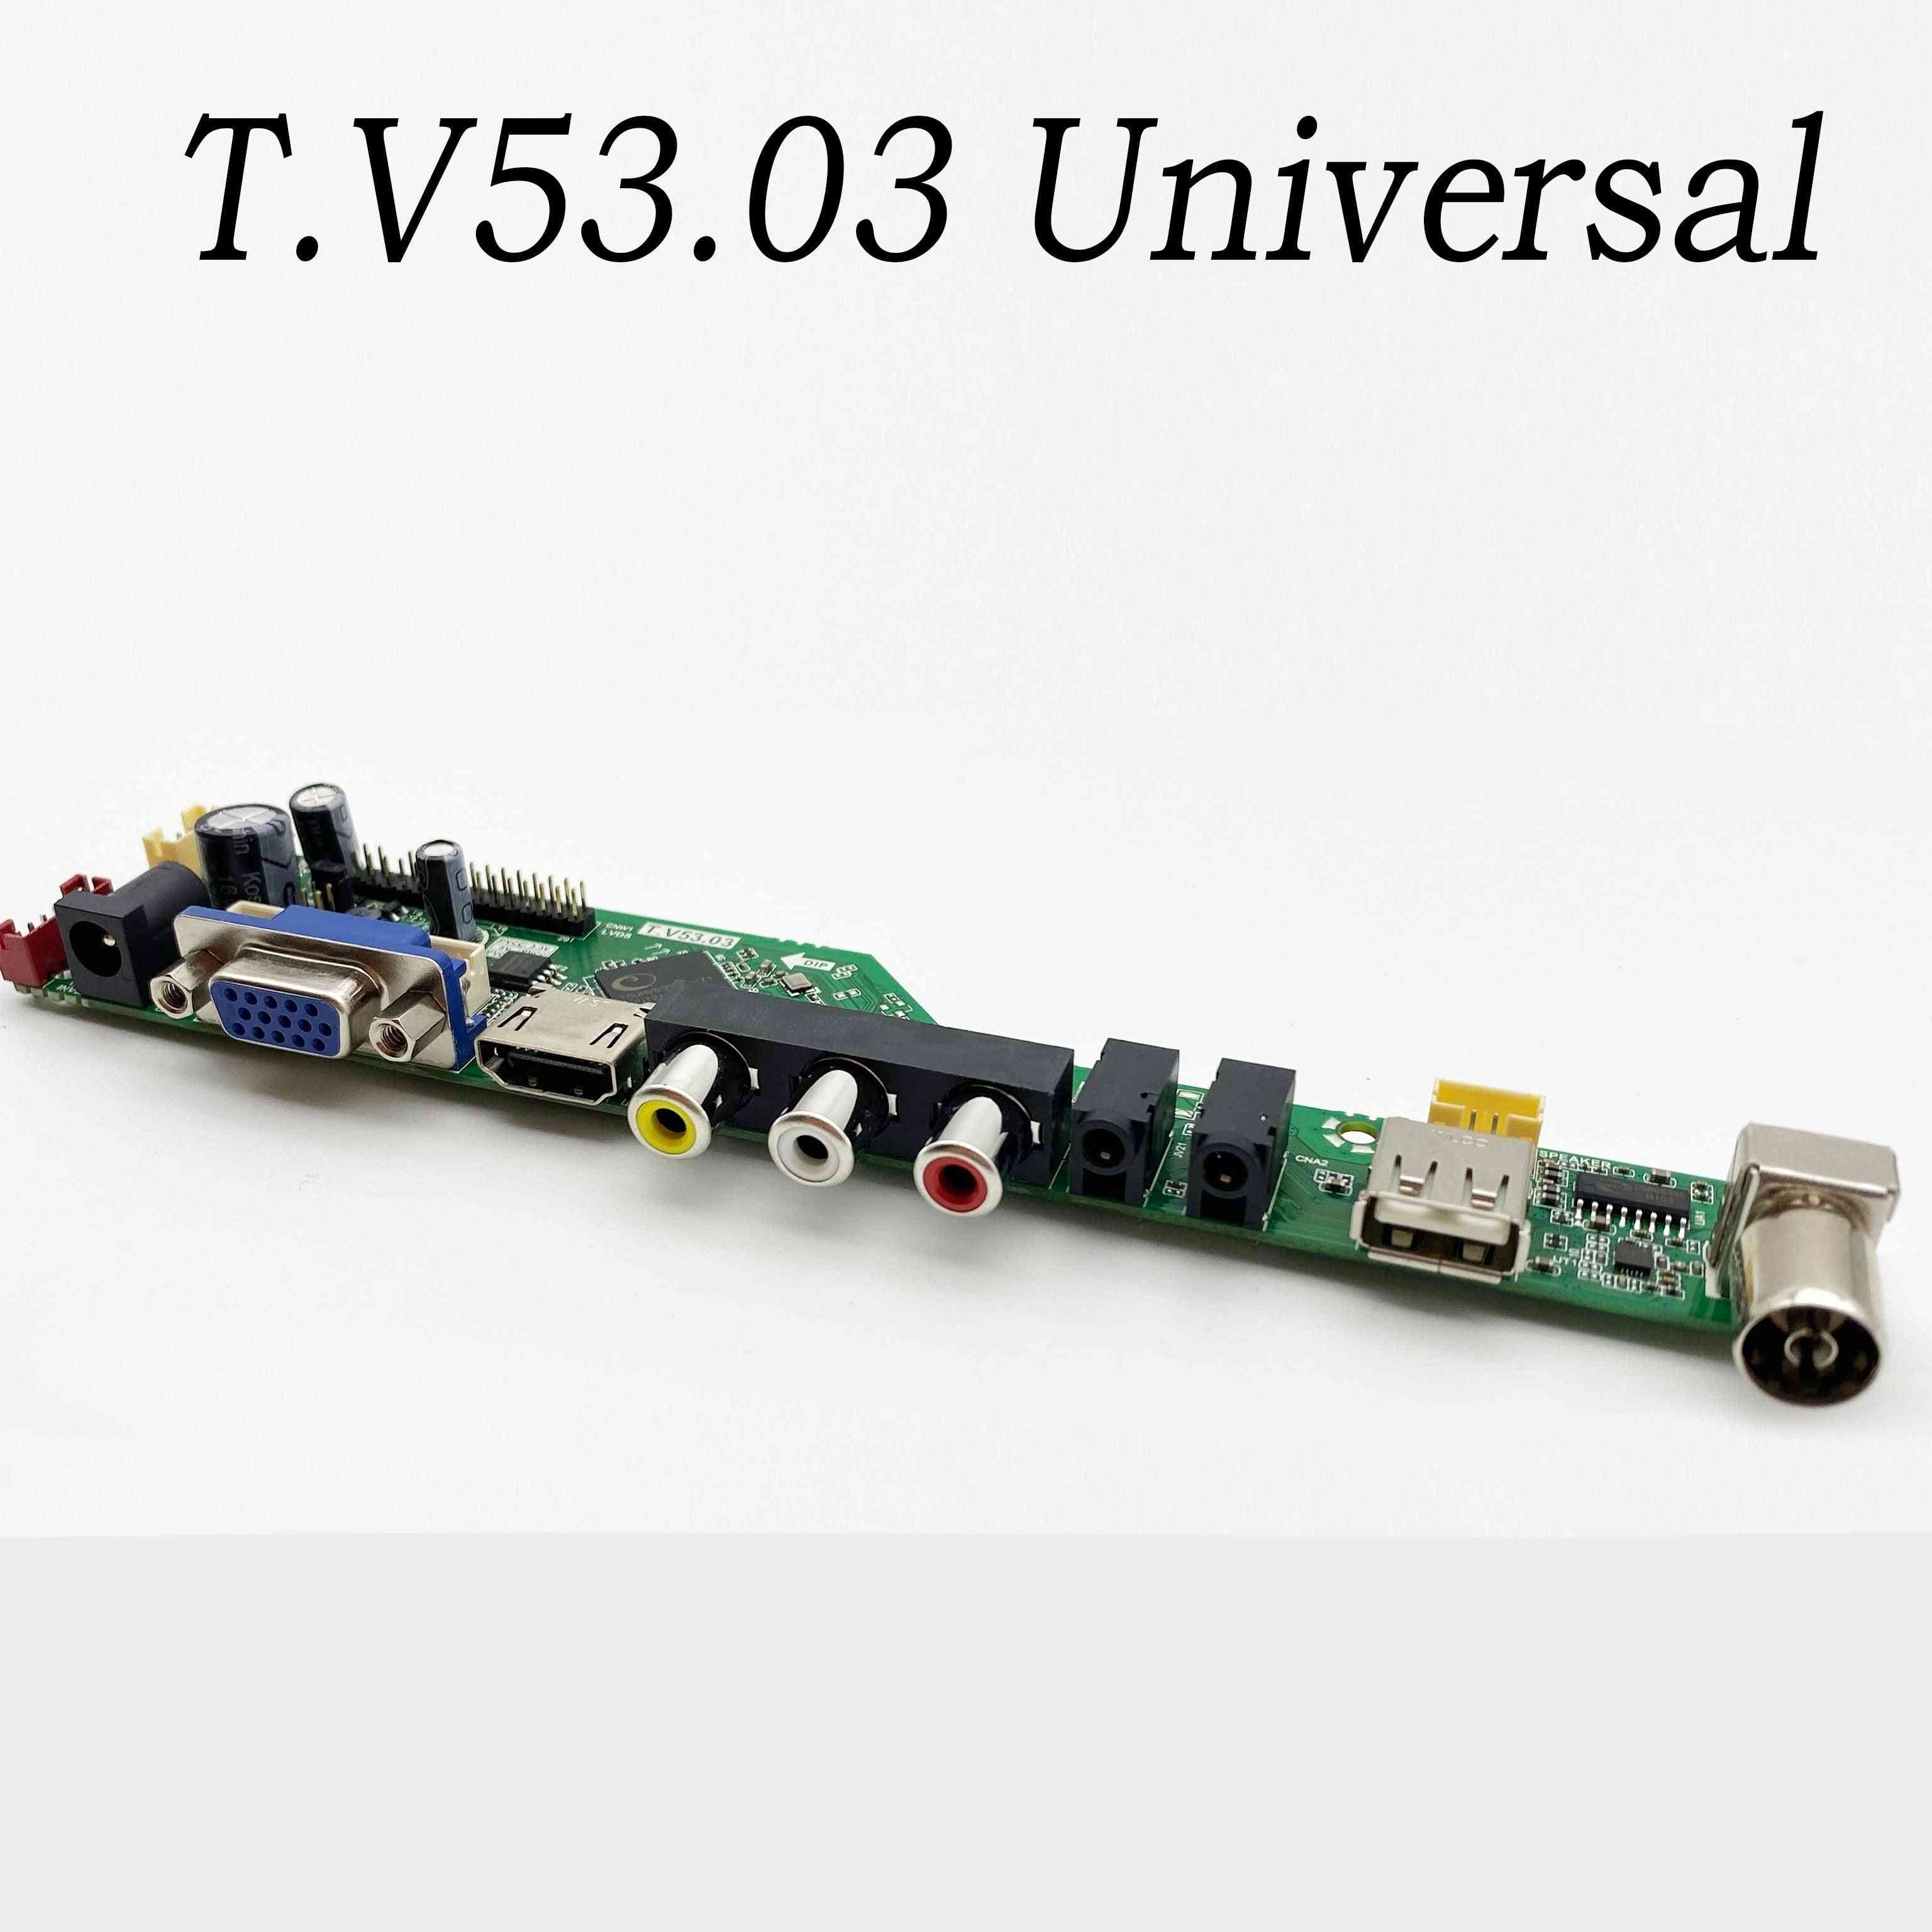 Universele lcd tv controller driver board, pc / vga / hdmi / usb interface + 7 key board + 2 lamp inverter